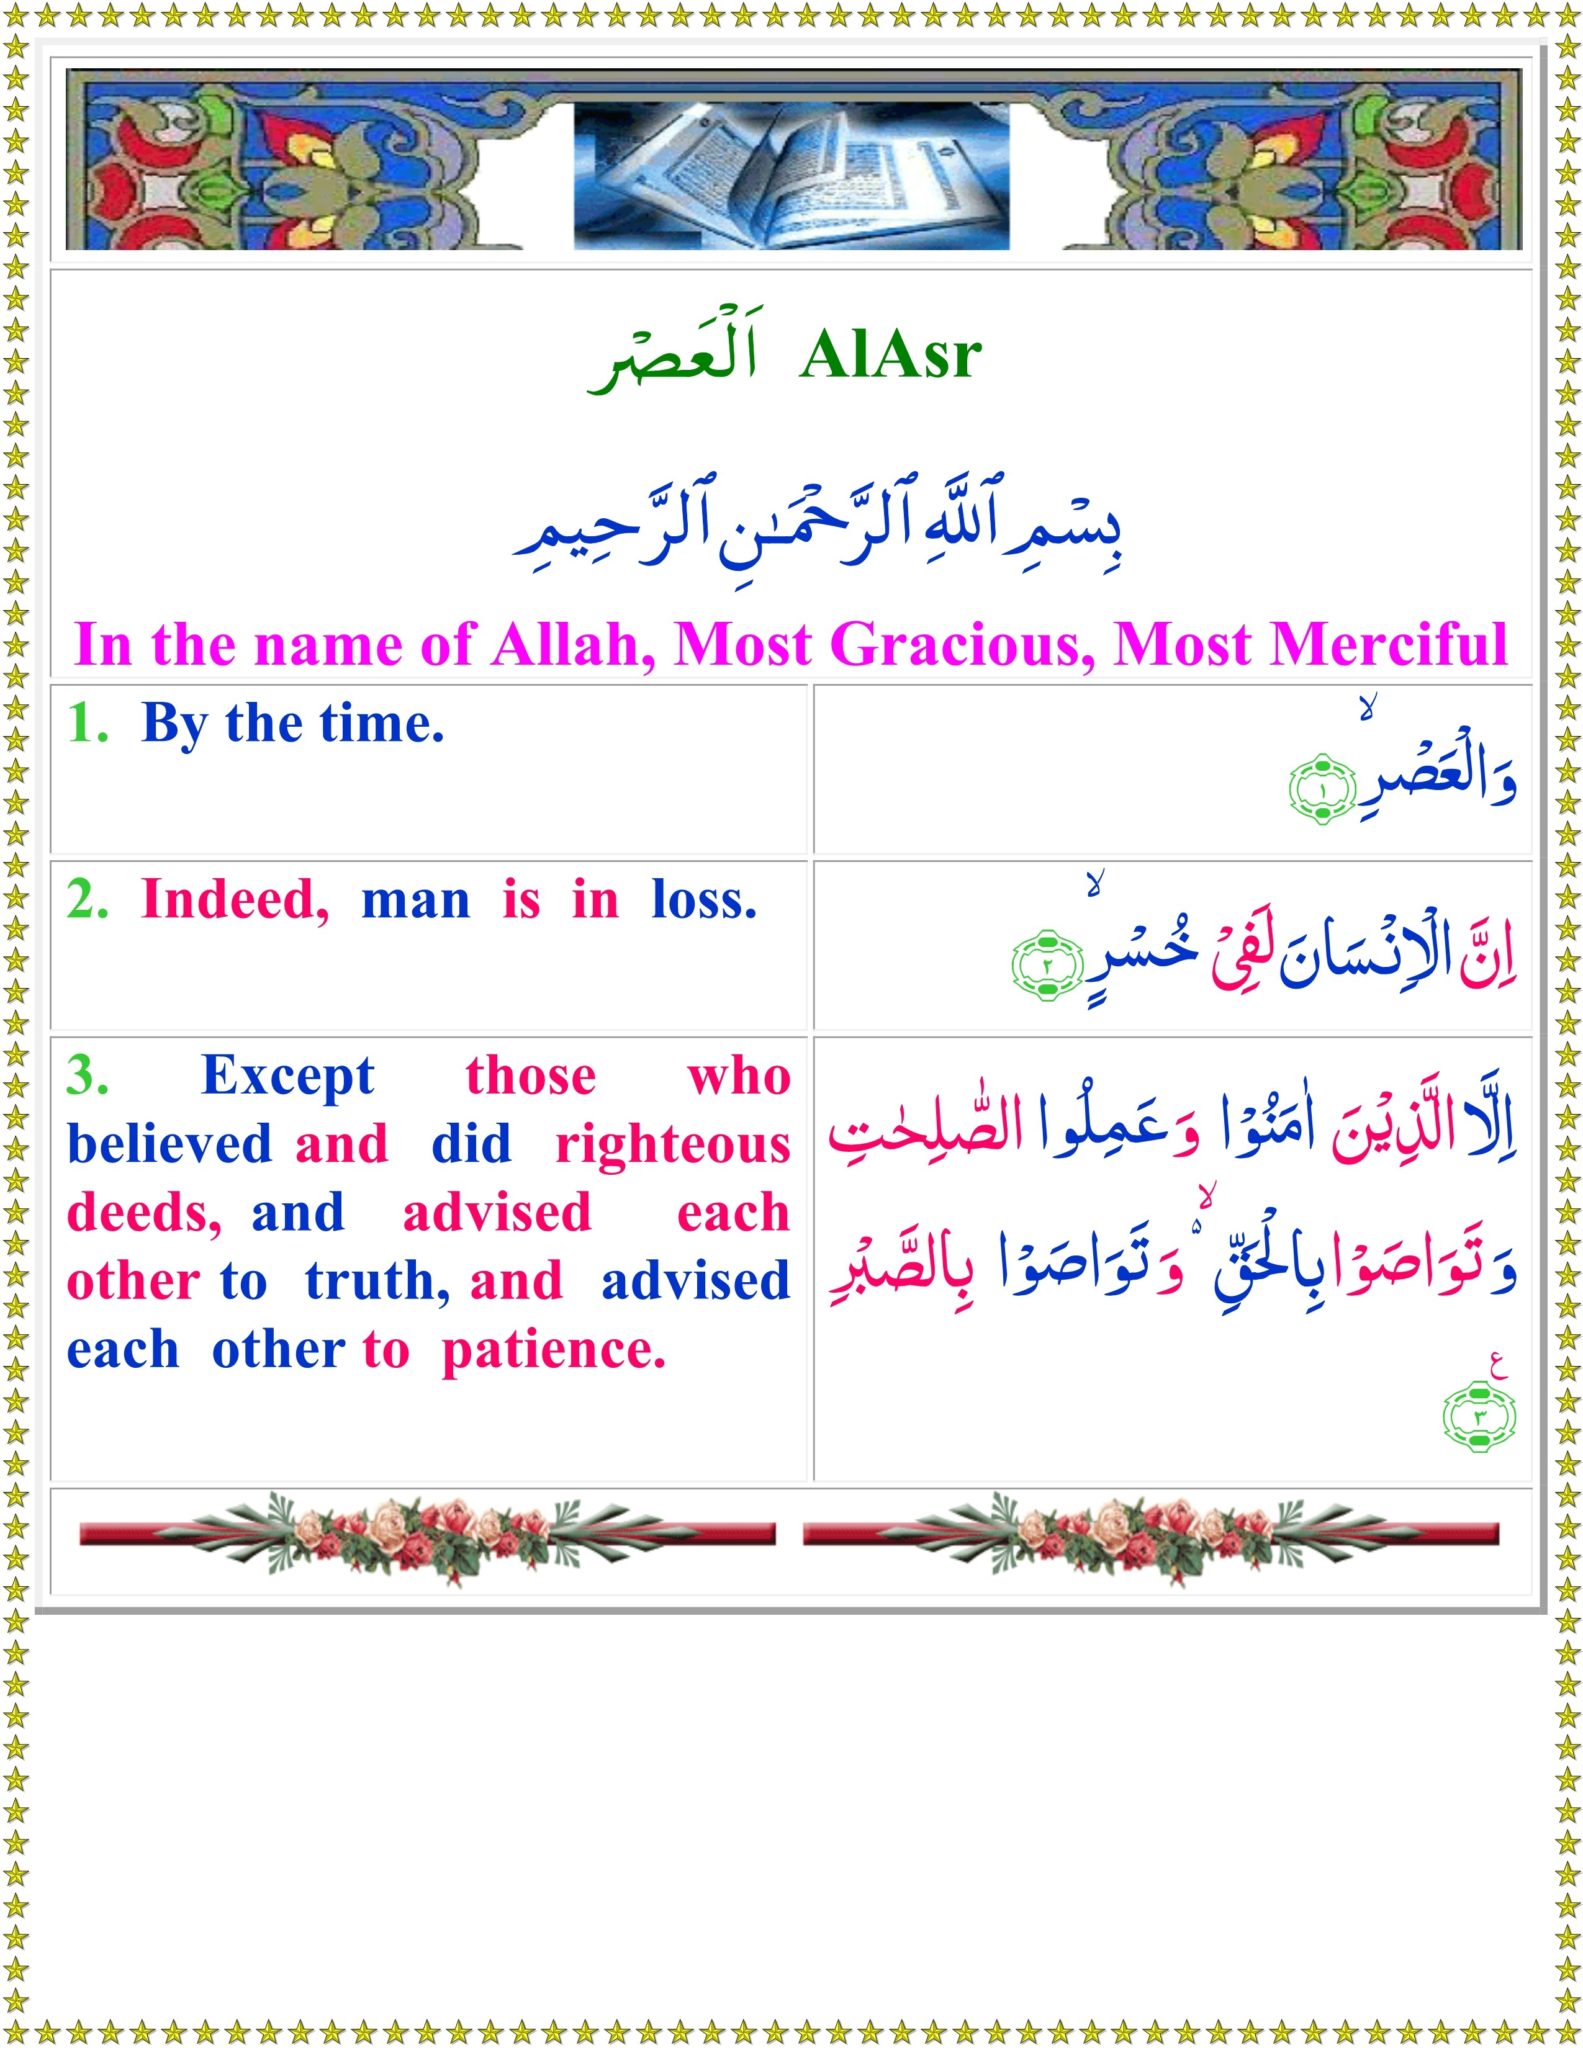 Surah Asr translation in English